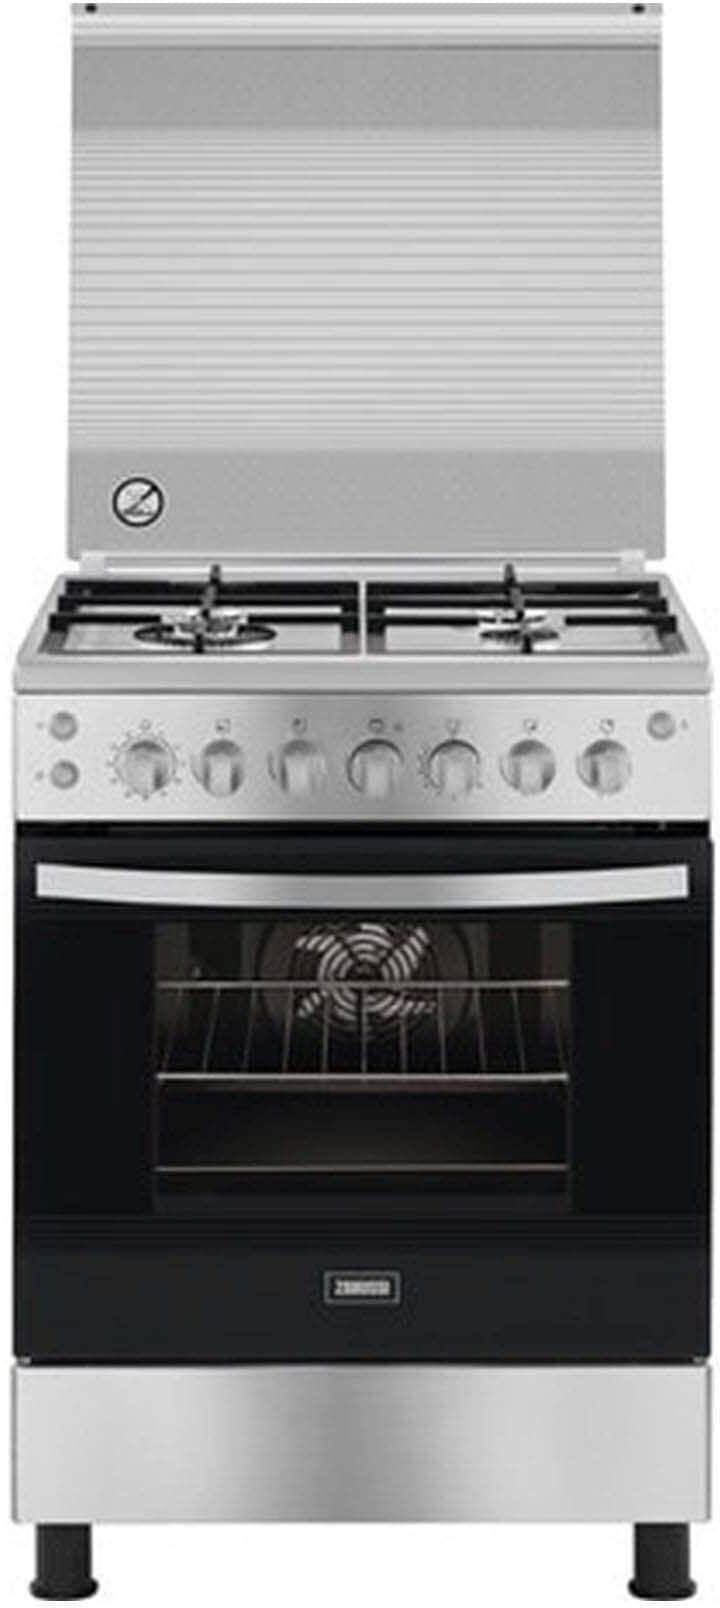 Zanussi Gas Cooker Cool Cast - 4 Burners - Silver - ZCG61296XA